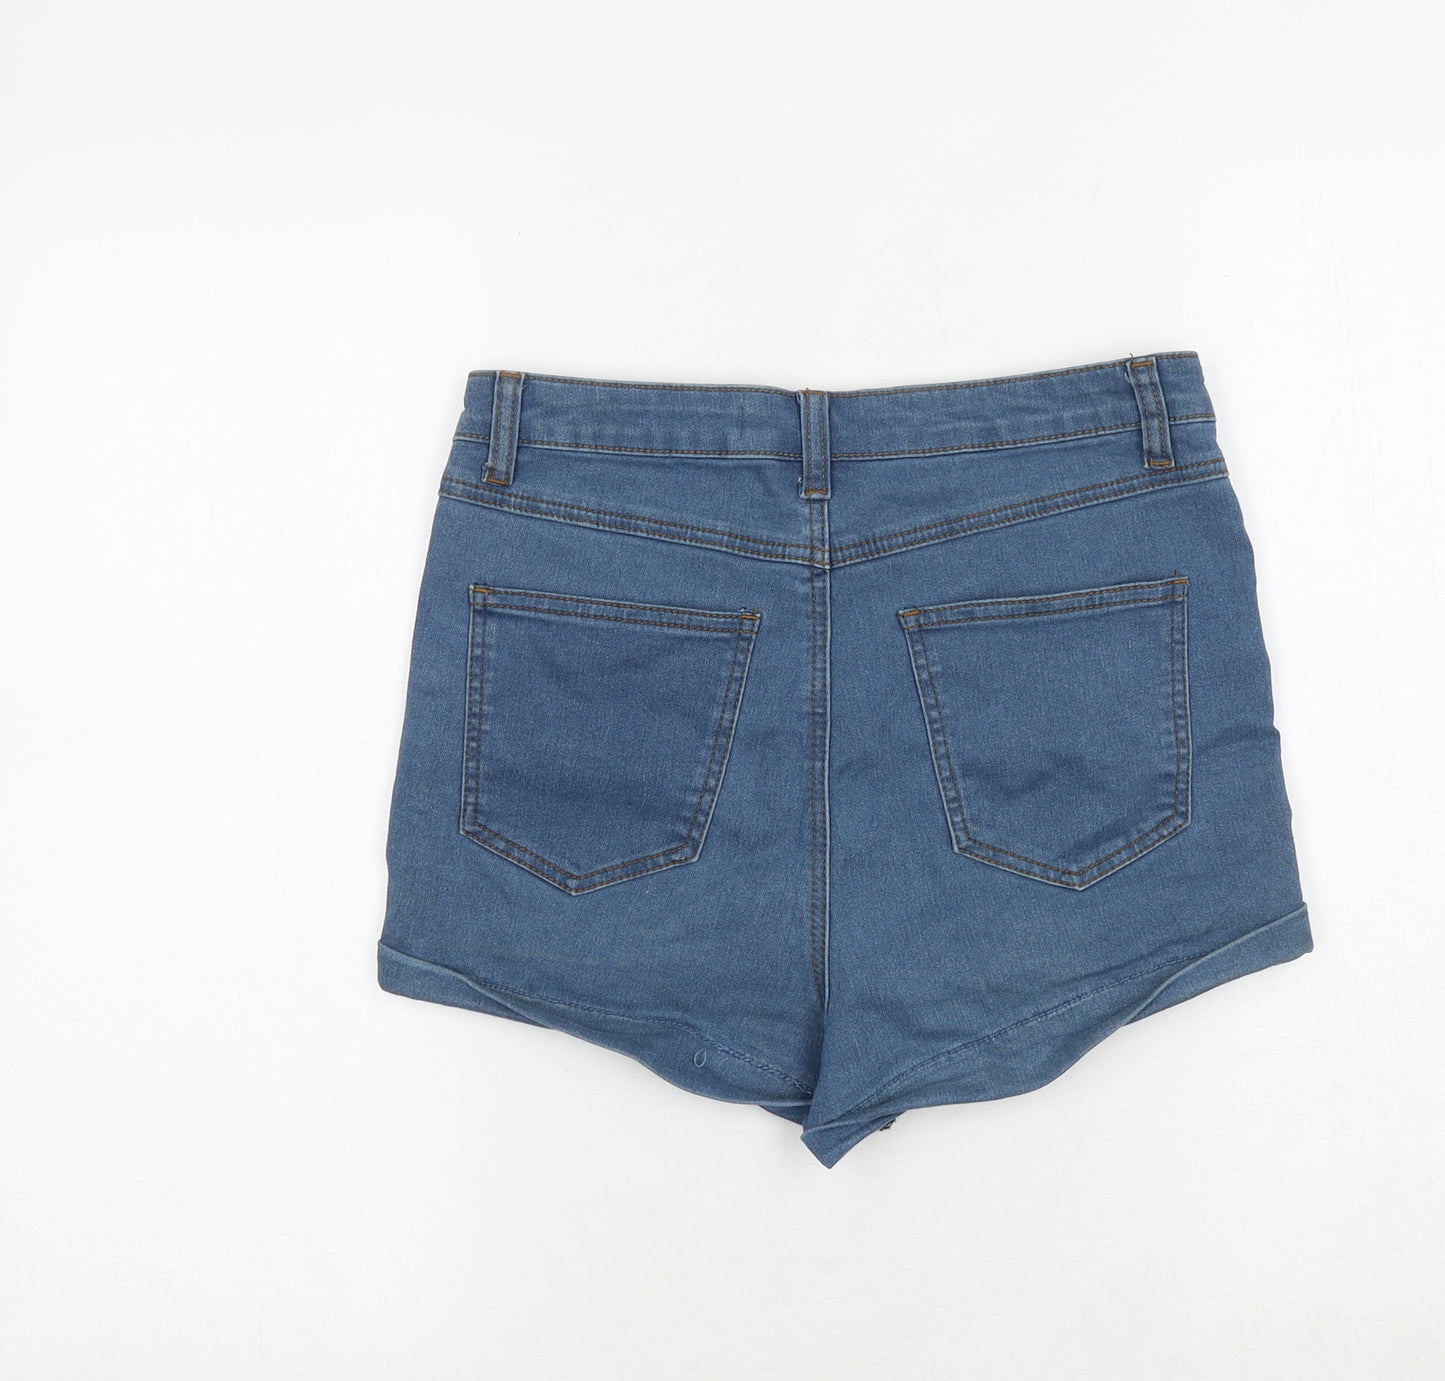 hearts&bows Womens Blue Cotton Hot Pants Shorts Size 12 Regular Zip